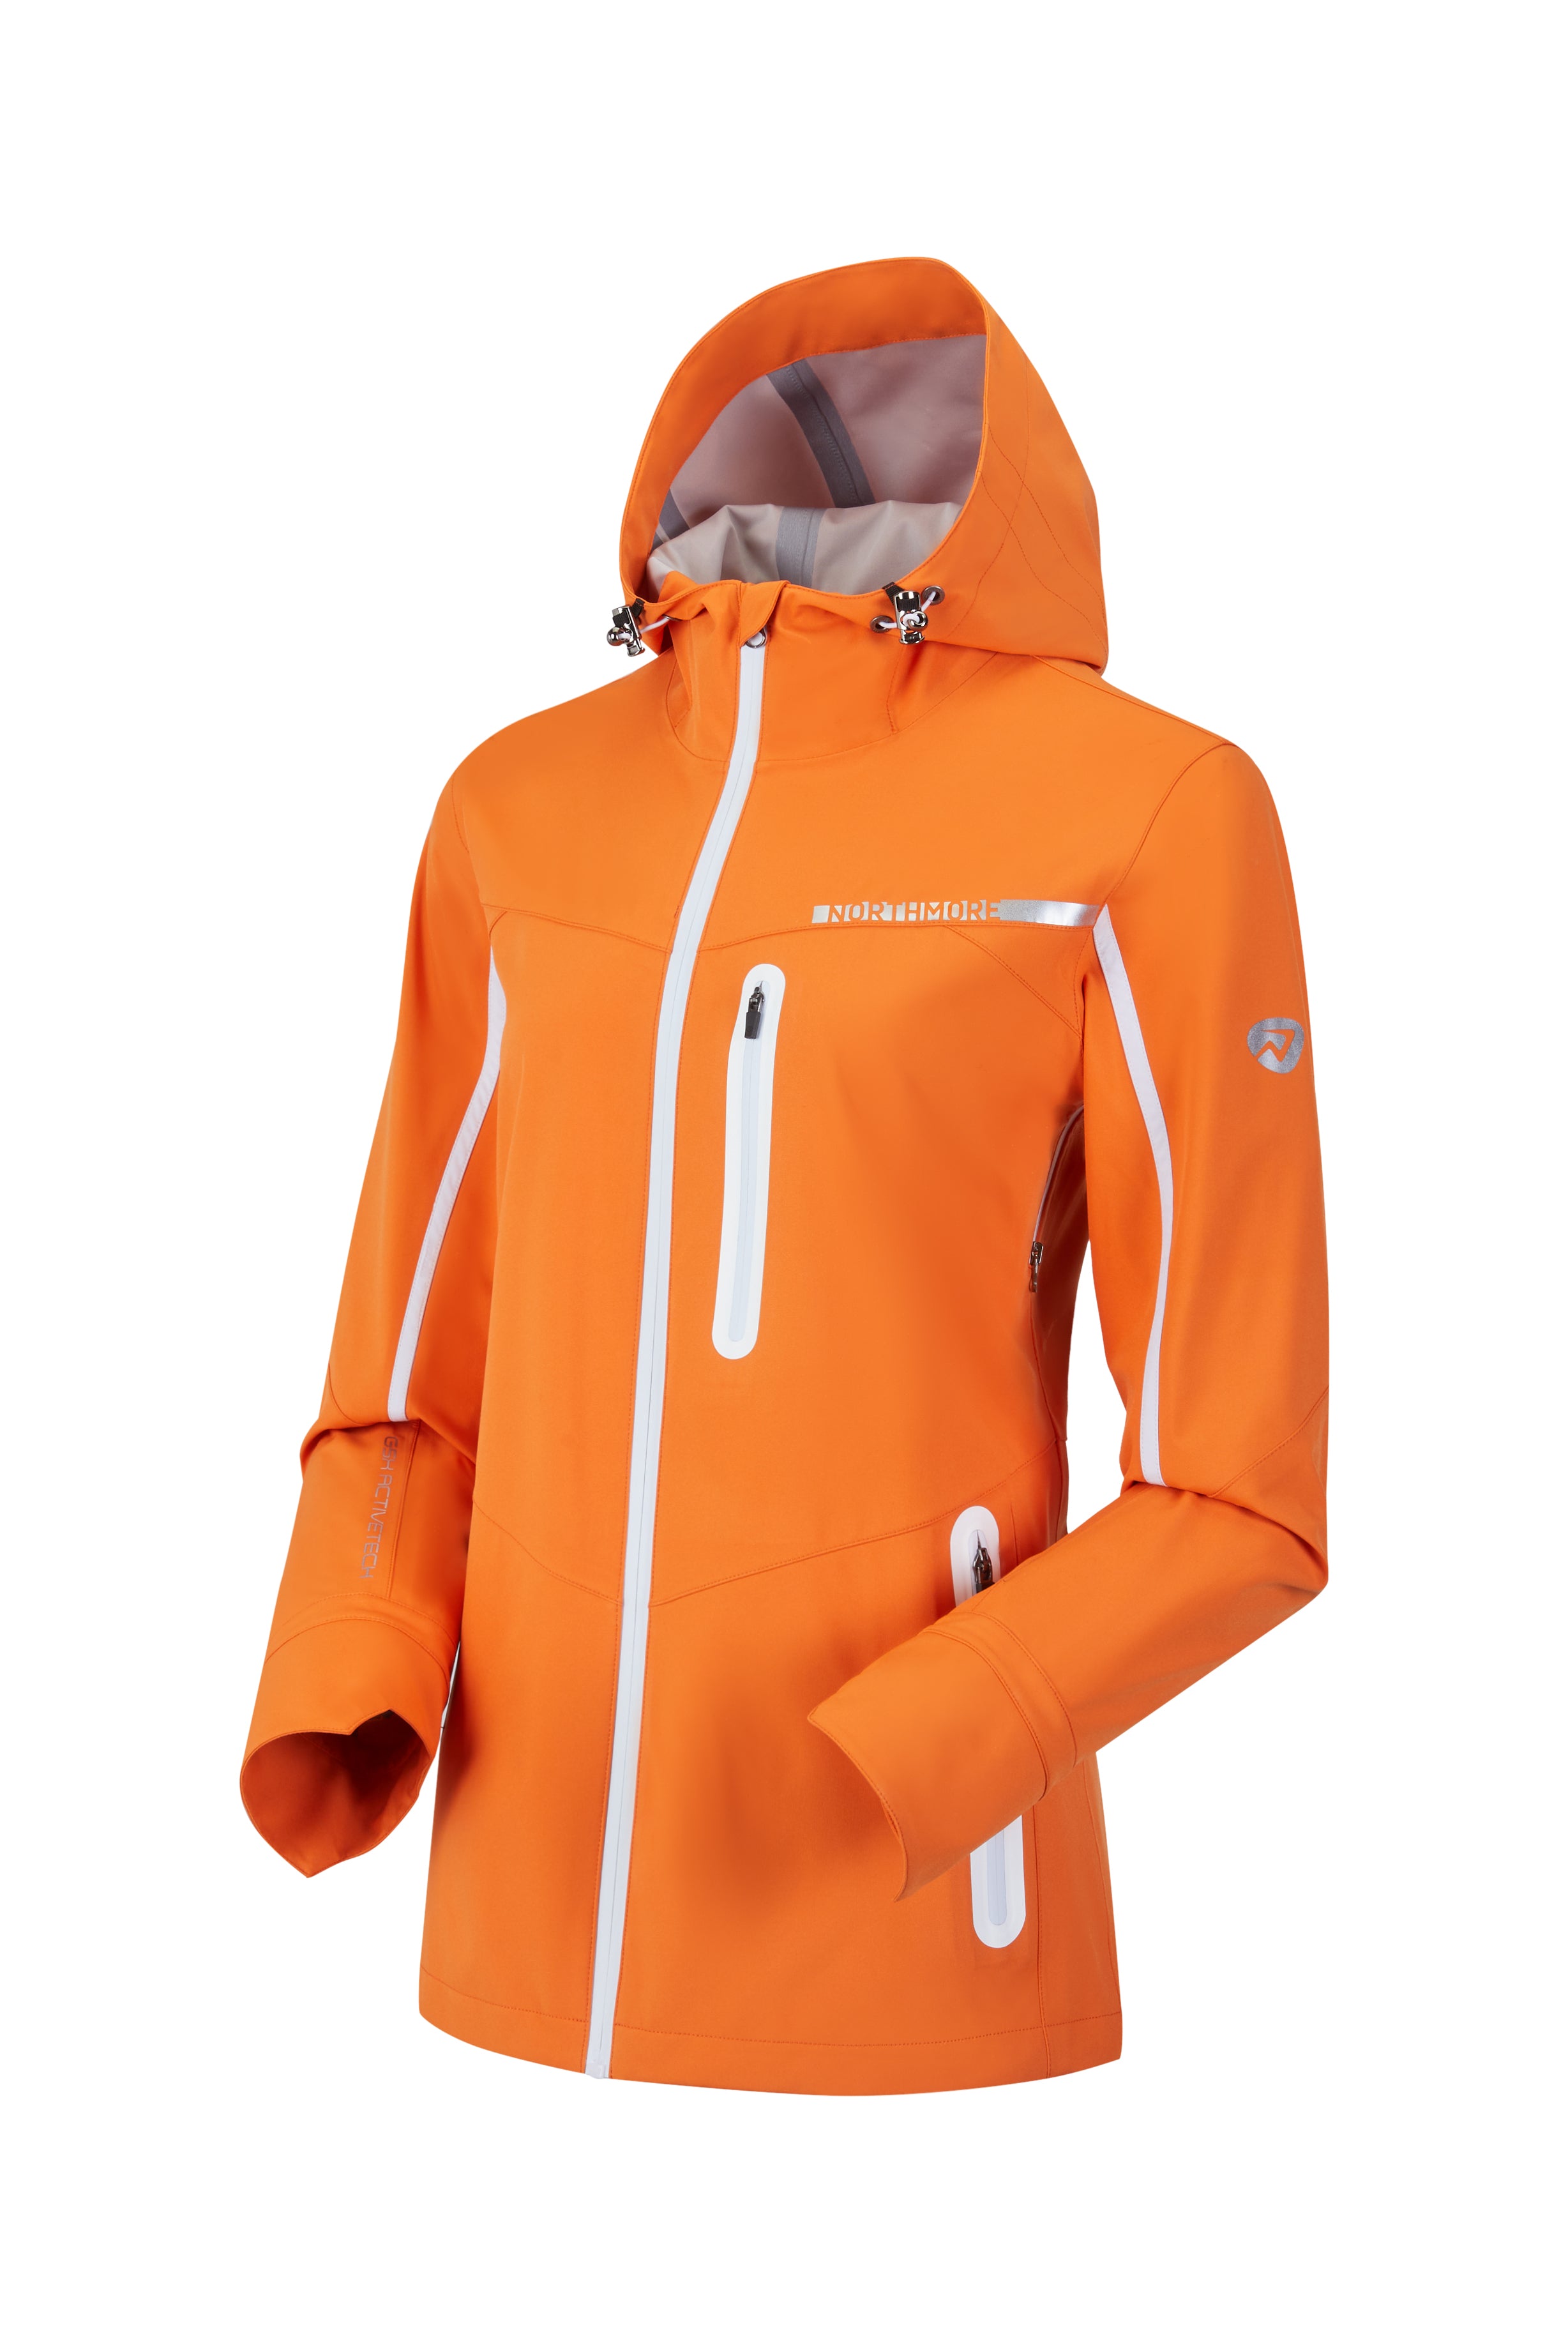 Forestar EX Hooded Windbreaker Jacket